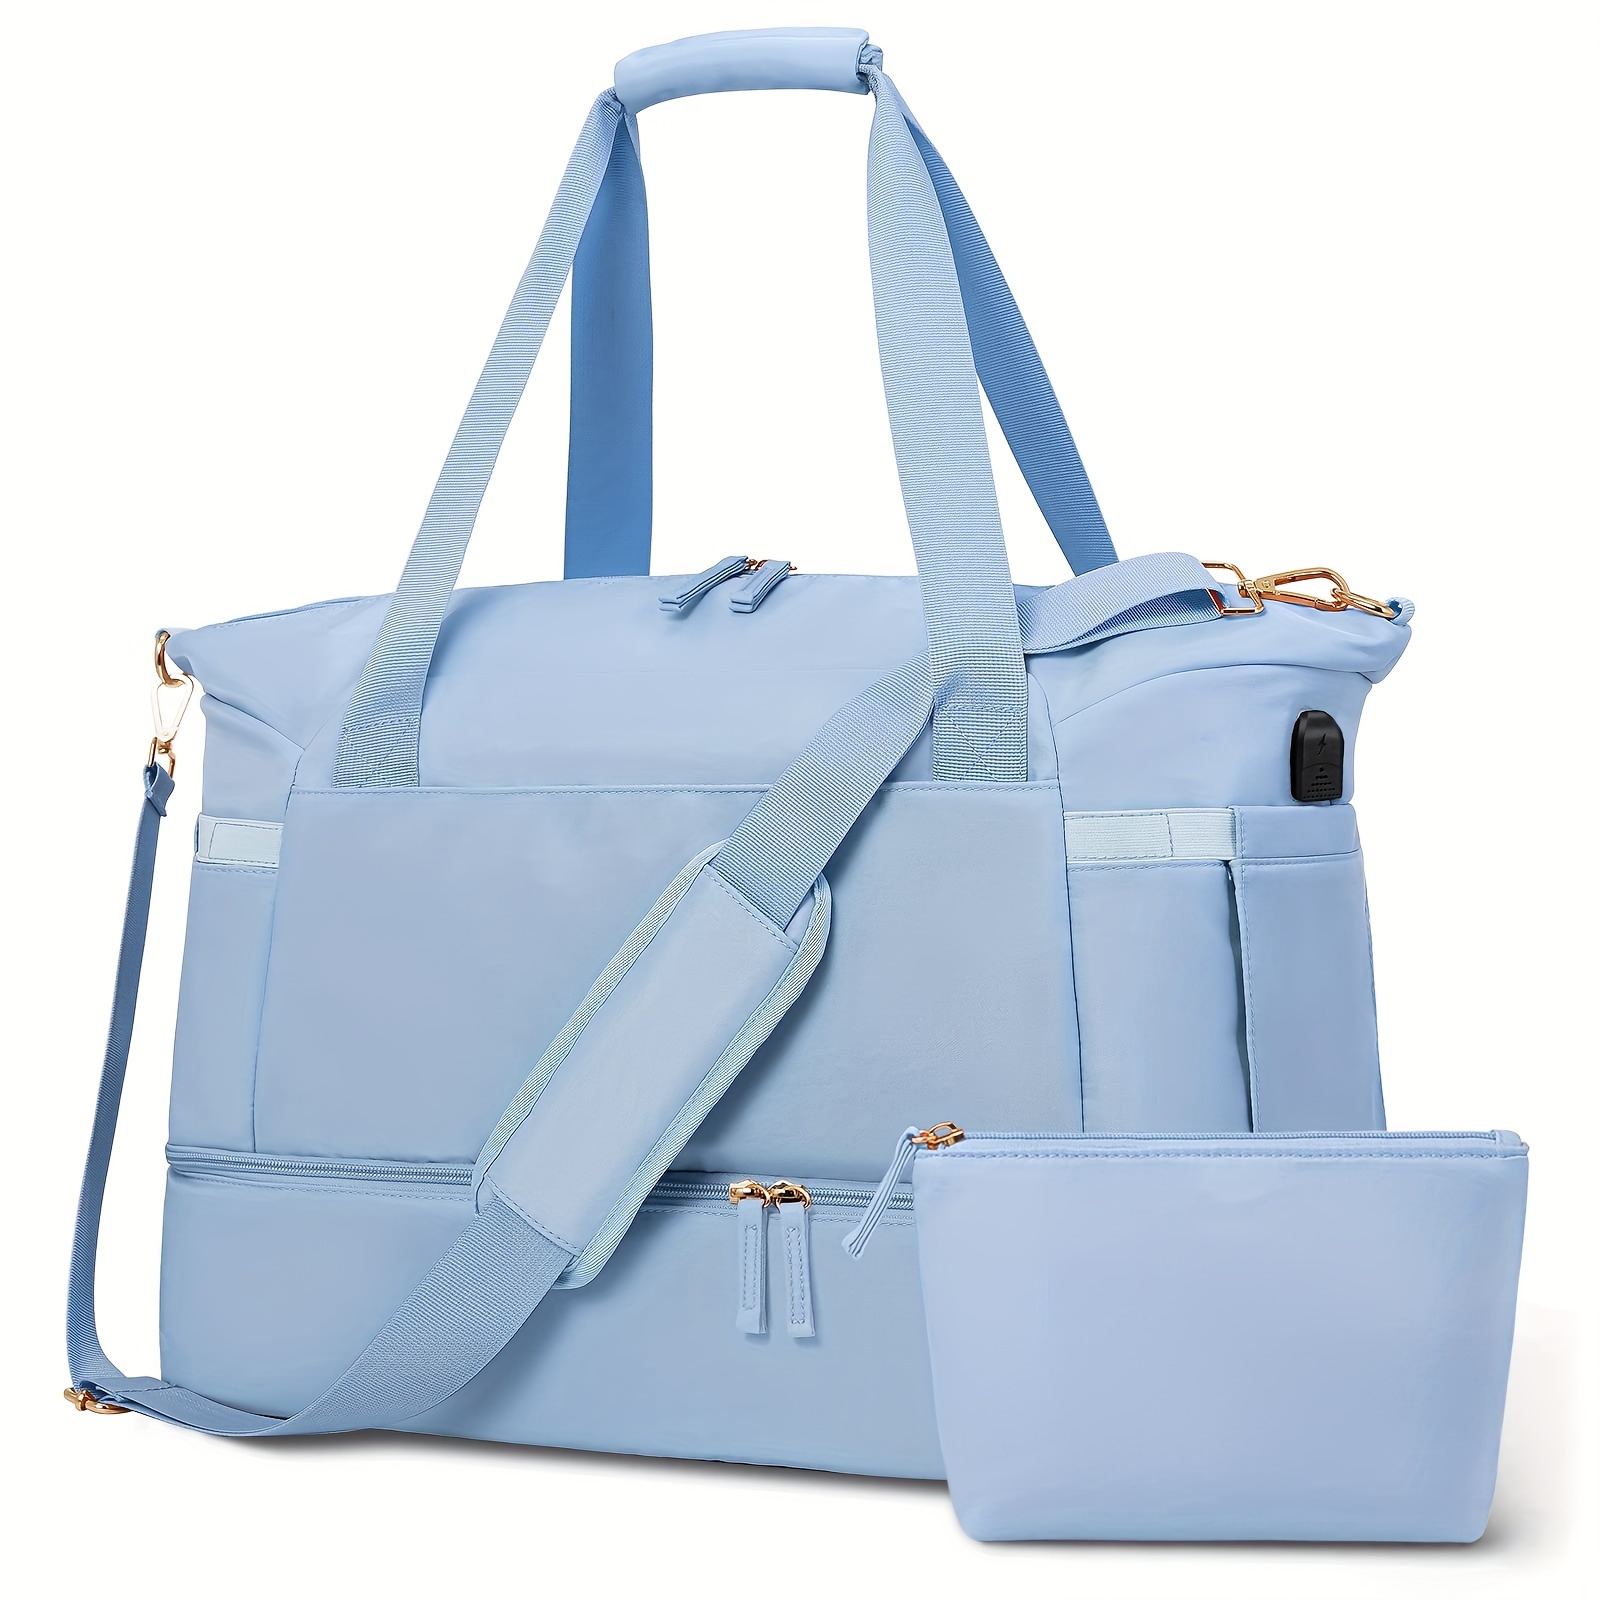 Bolsa de viaje, bolsas de fin de semana para mujer, bolsa de lona para  bolsas de viaje de viaje, bolsa de mano para la noche, Azul Noche _17,  Bolsa de